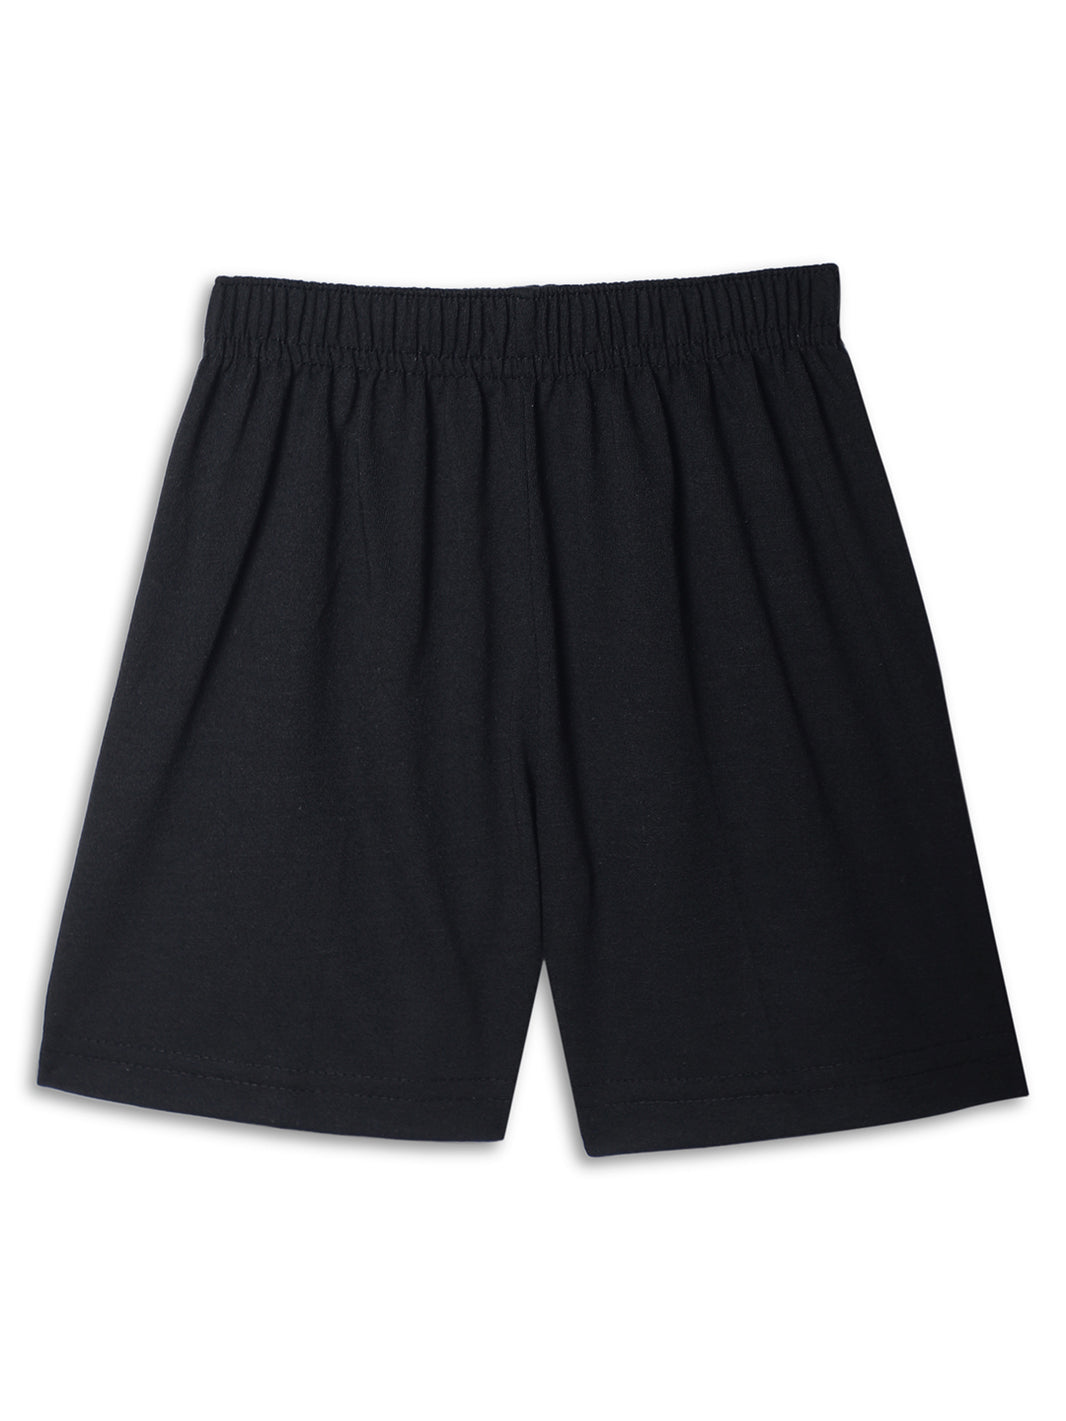 Vimal Jonney Printed  Black Regular Fit Cotton blended Shorts For Kids